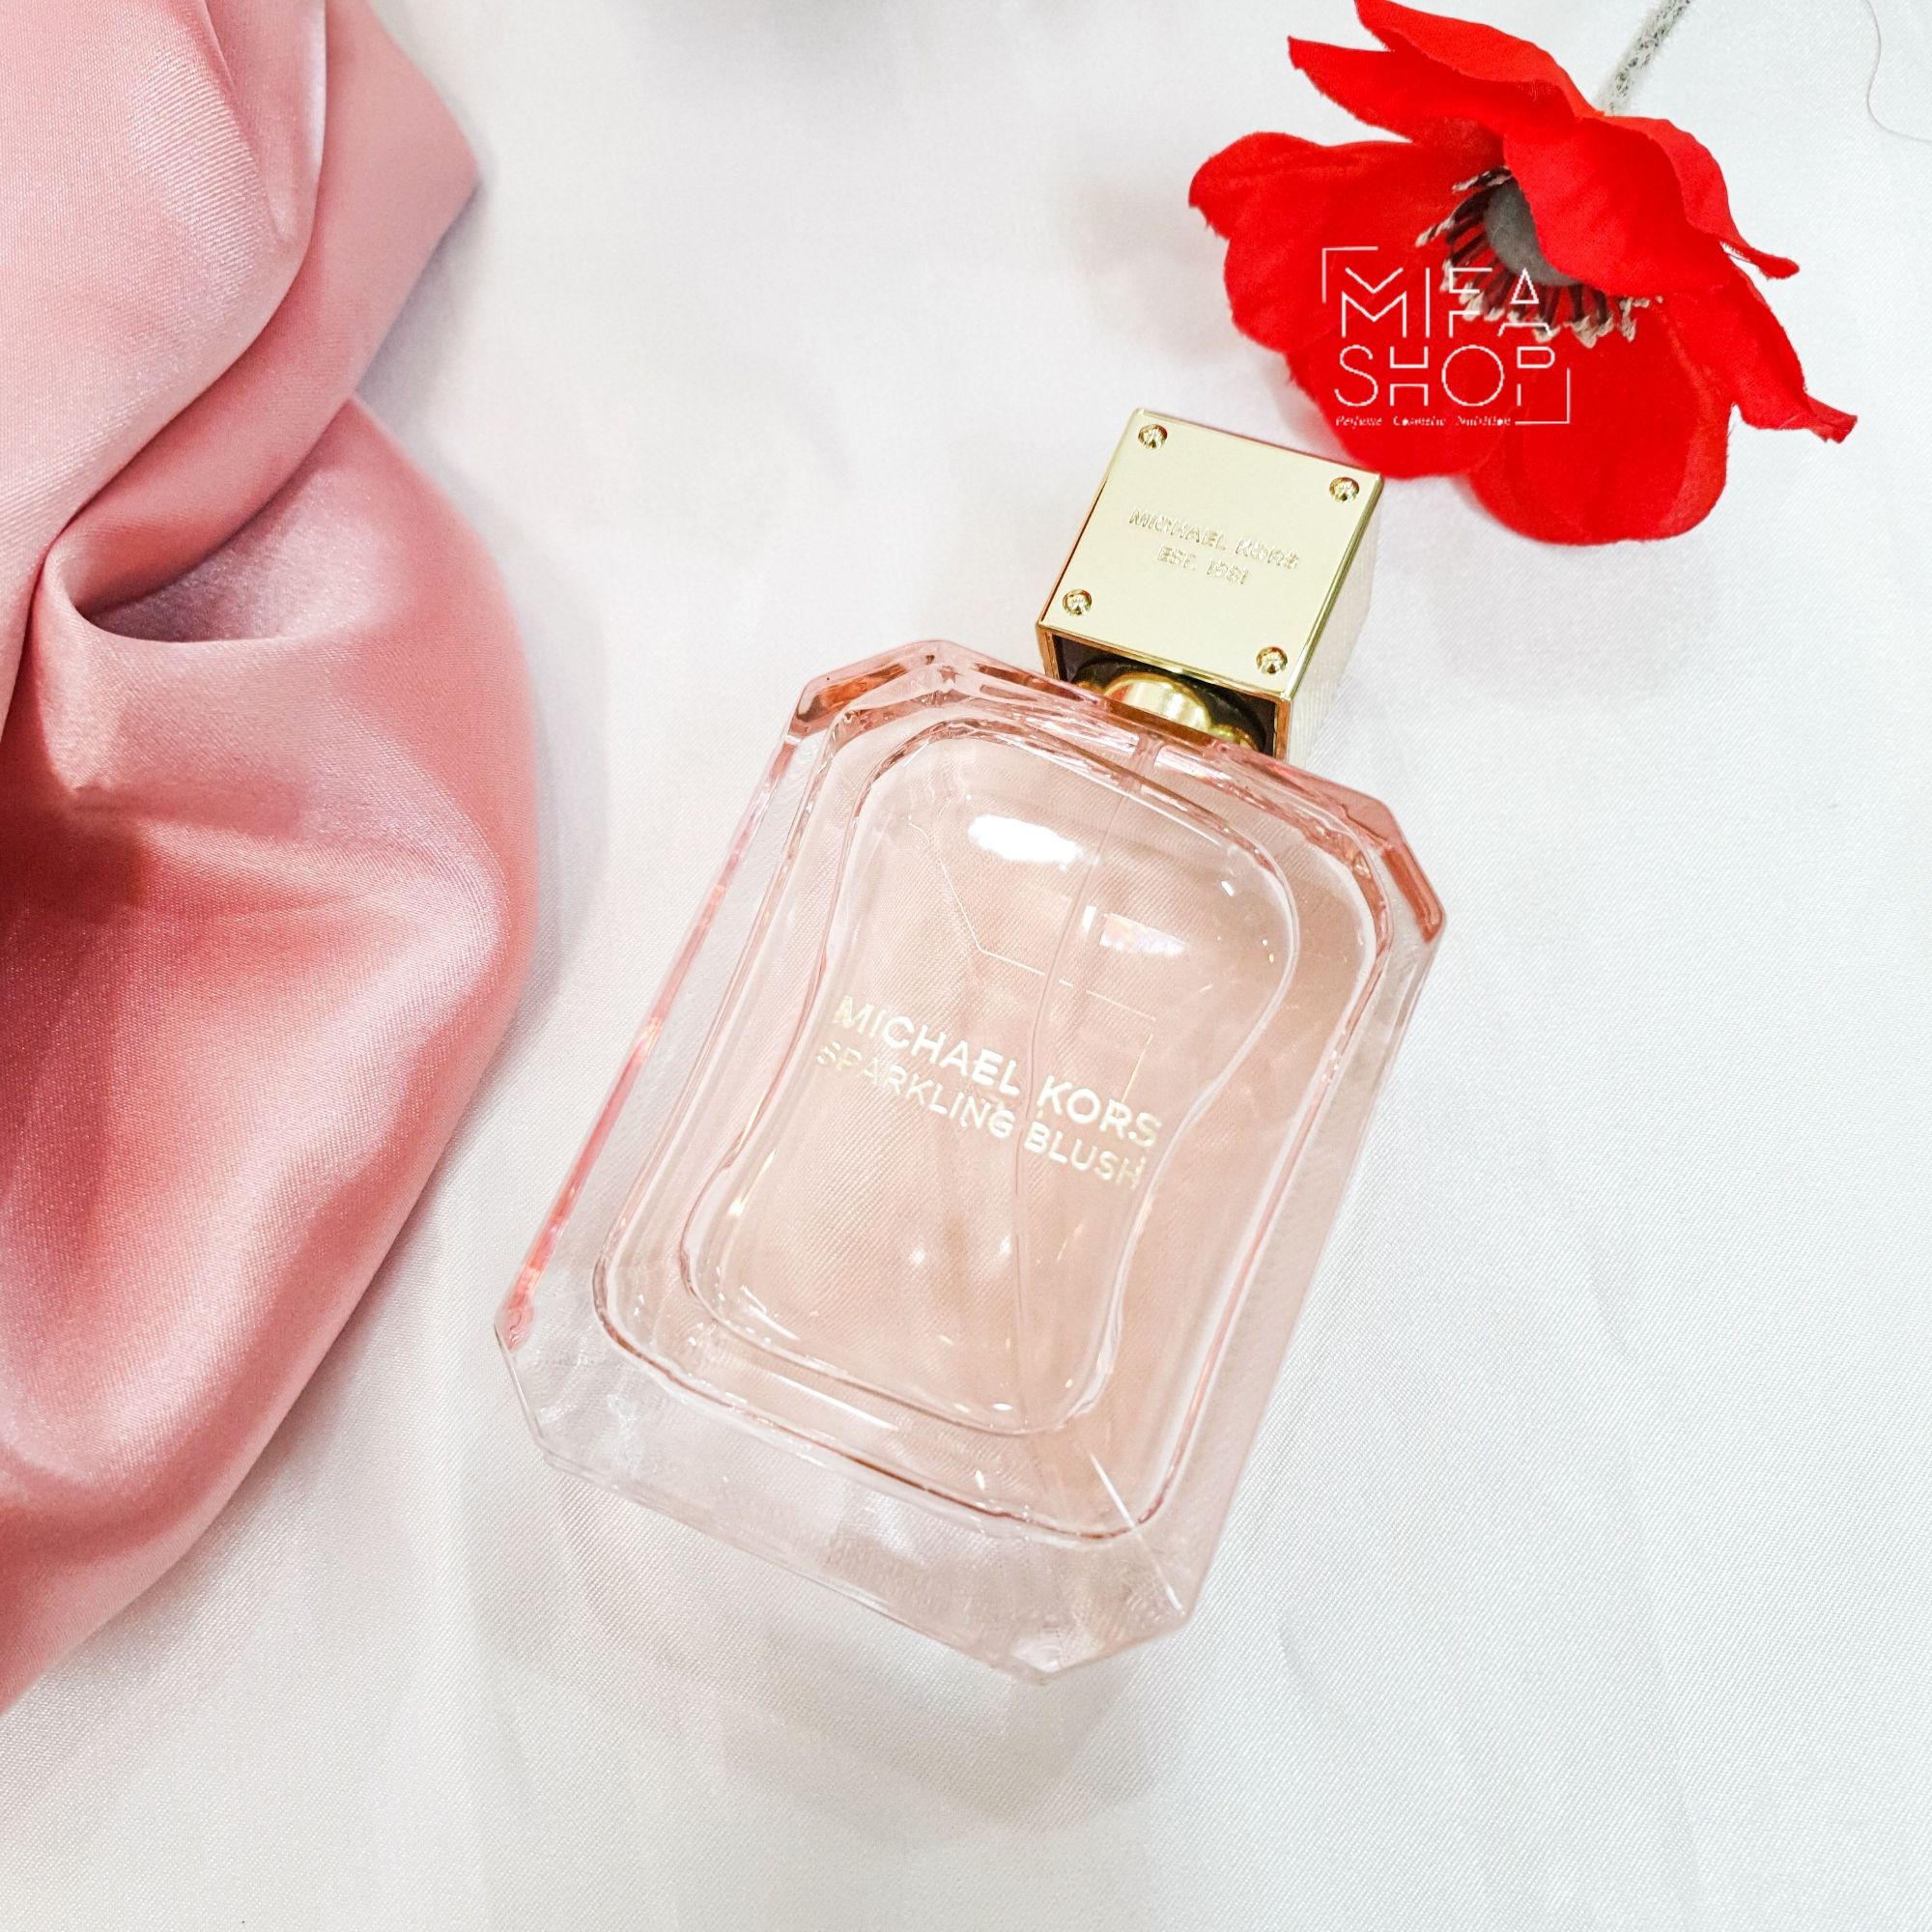 8 Yıl on Instagram Michael Kors Sparkling Blush EDP 50ML Kadın Parfüm  Seti 450tl parfum perfume m parfumoriginal parfummurah parfume  fragrance parf